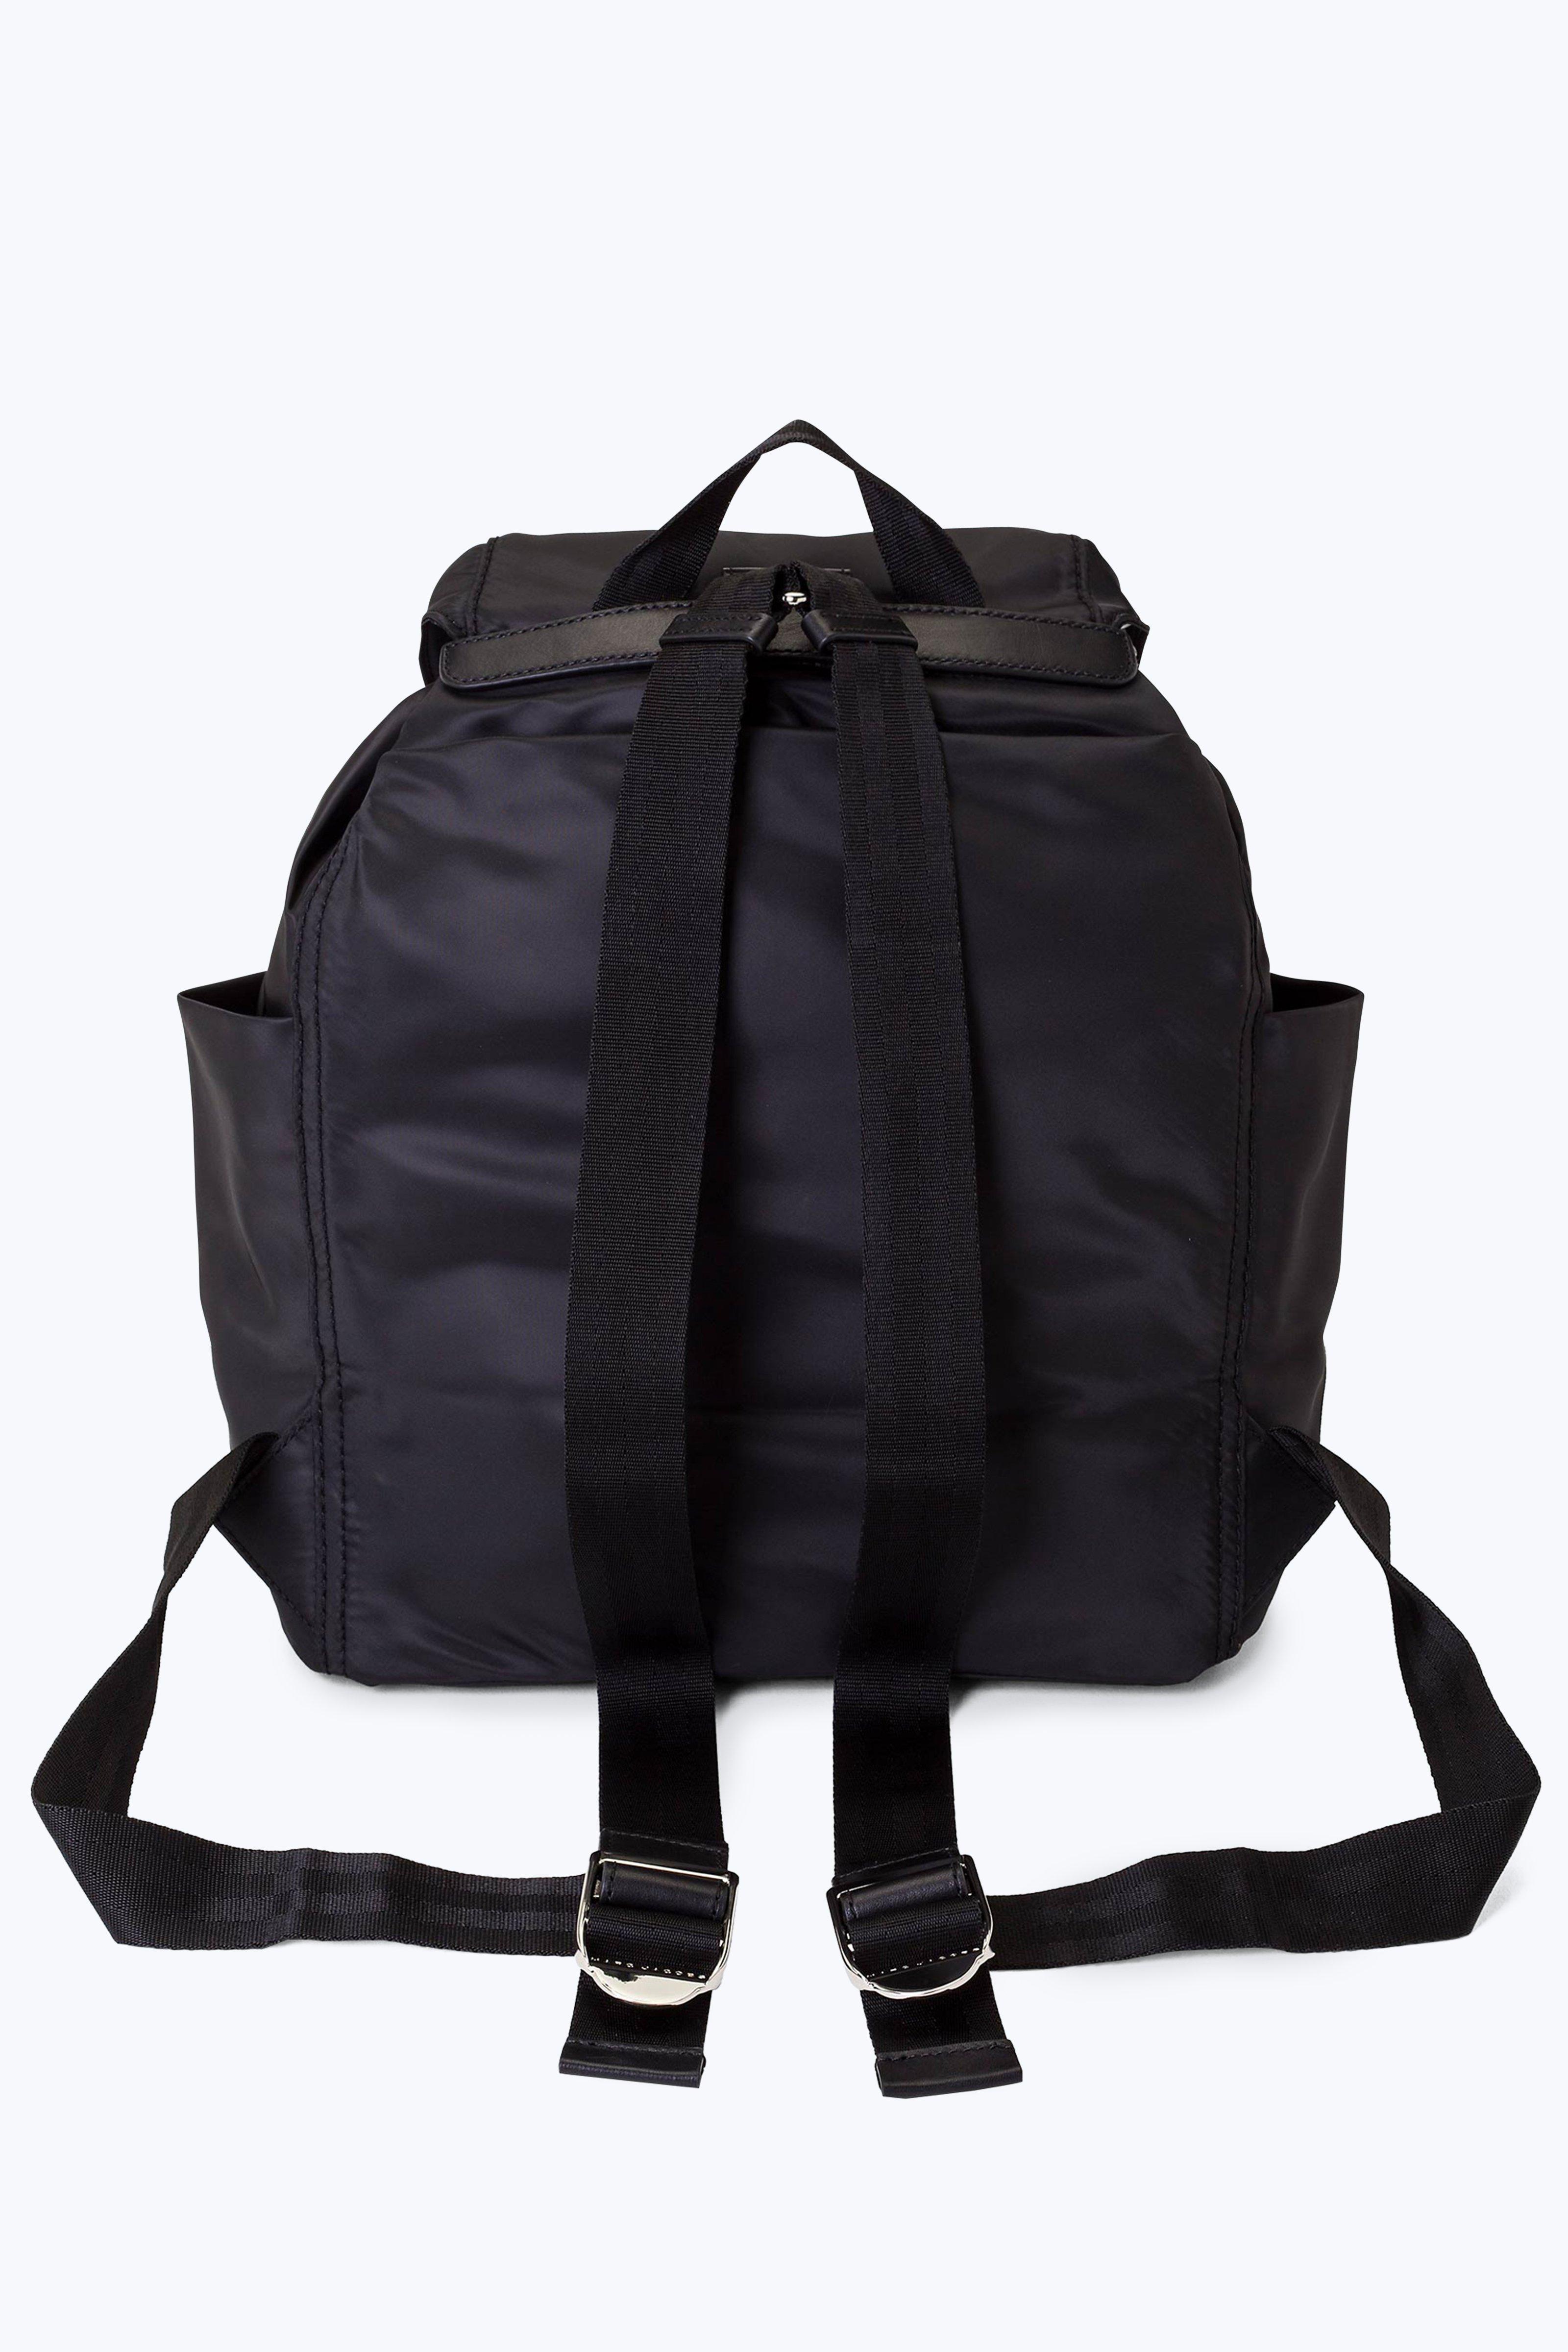 Lyst - Marc Jacobs Easy Backpack in Black